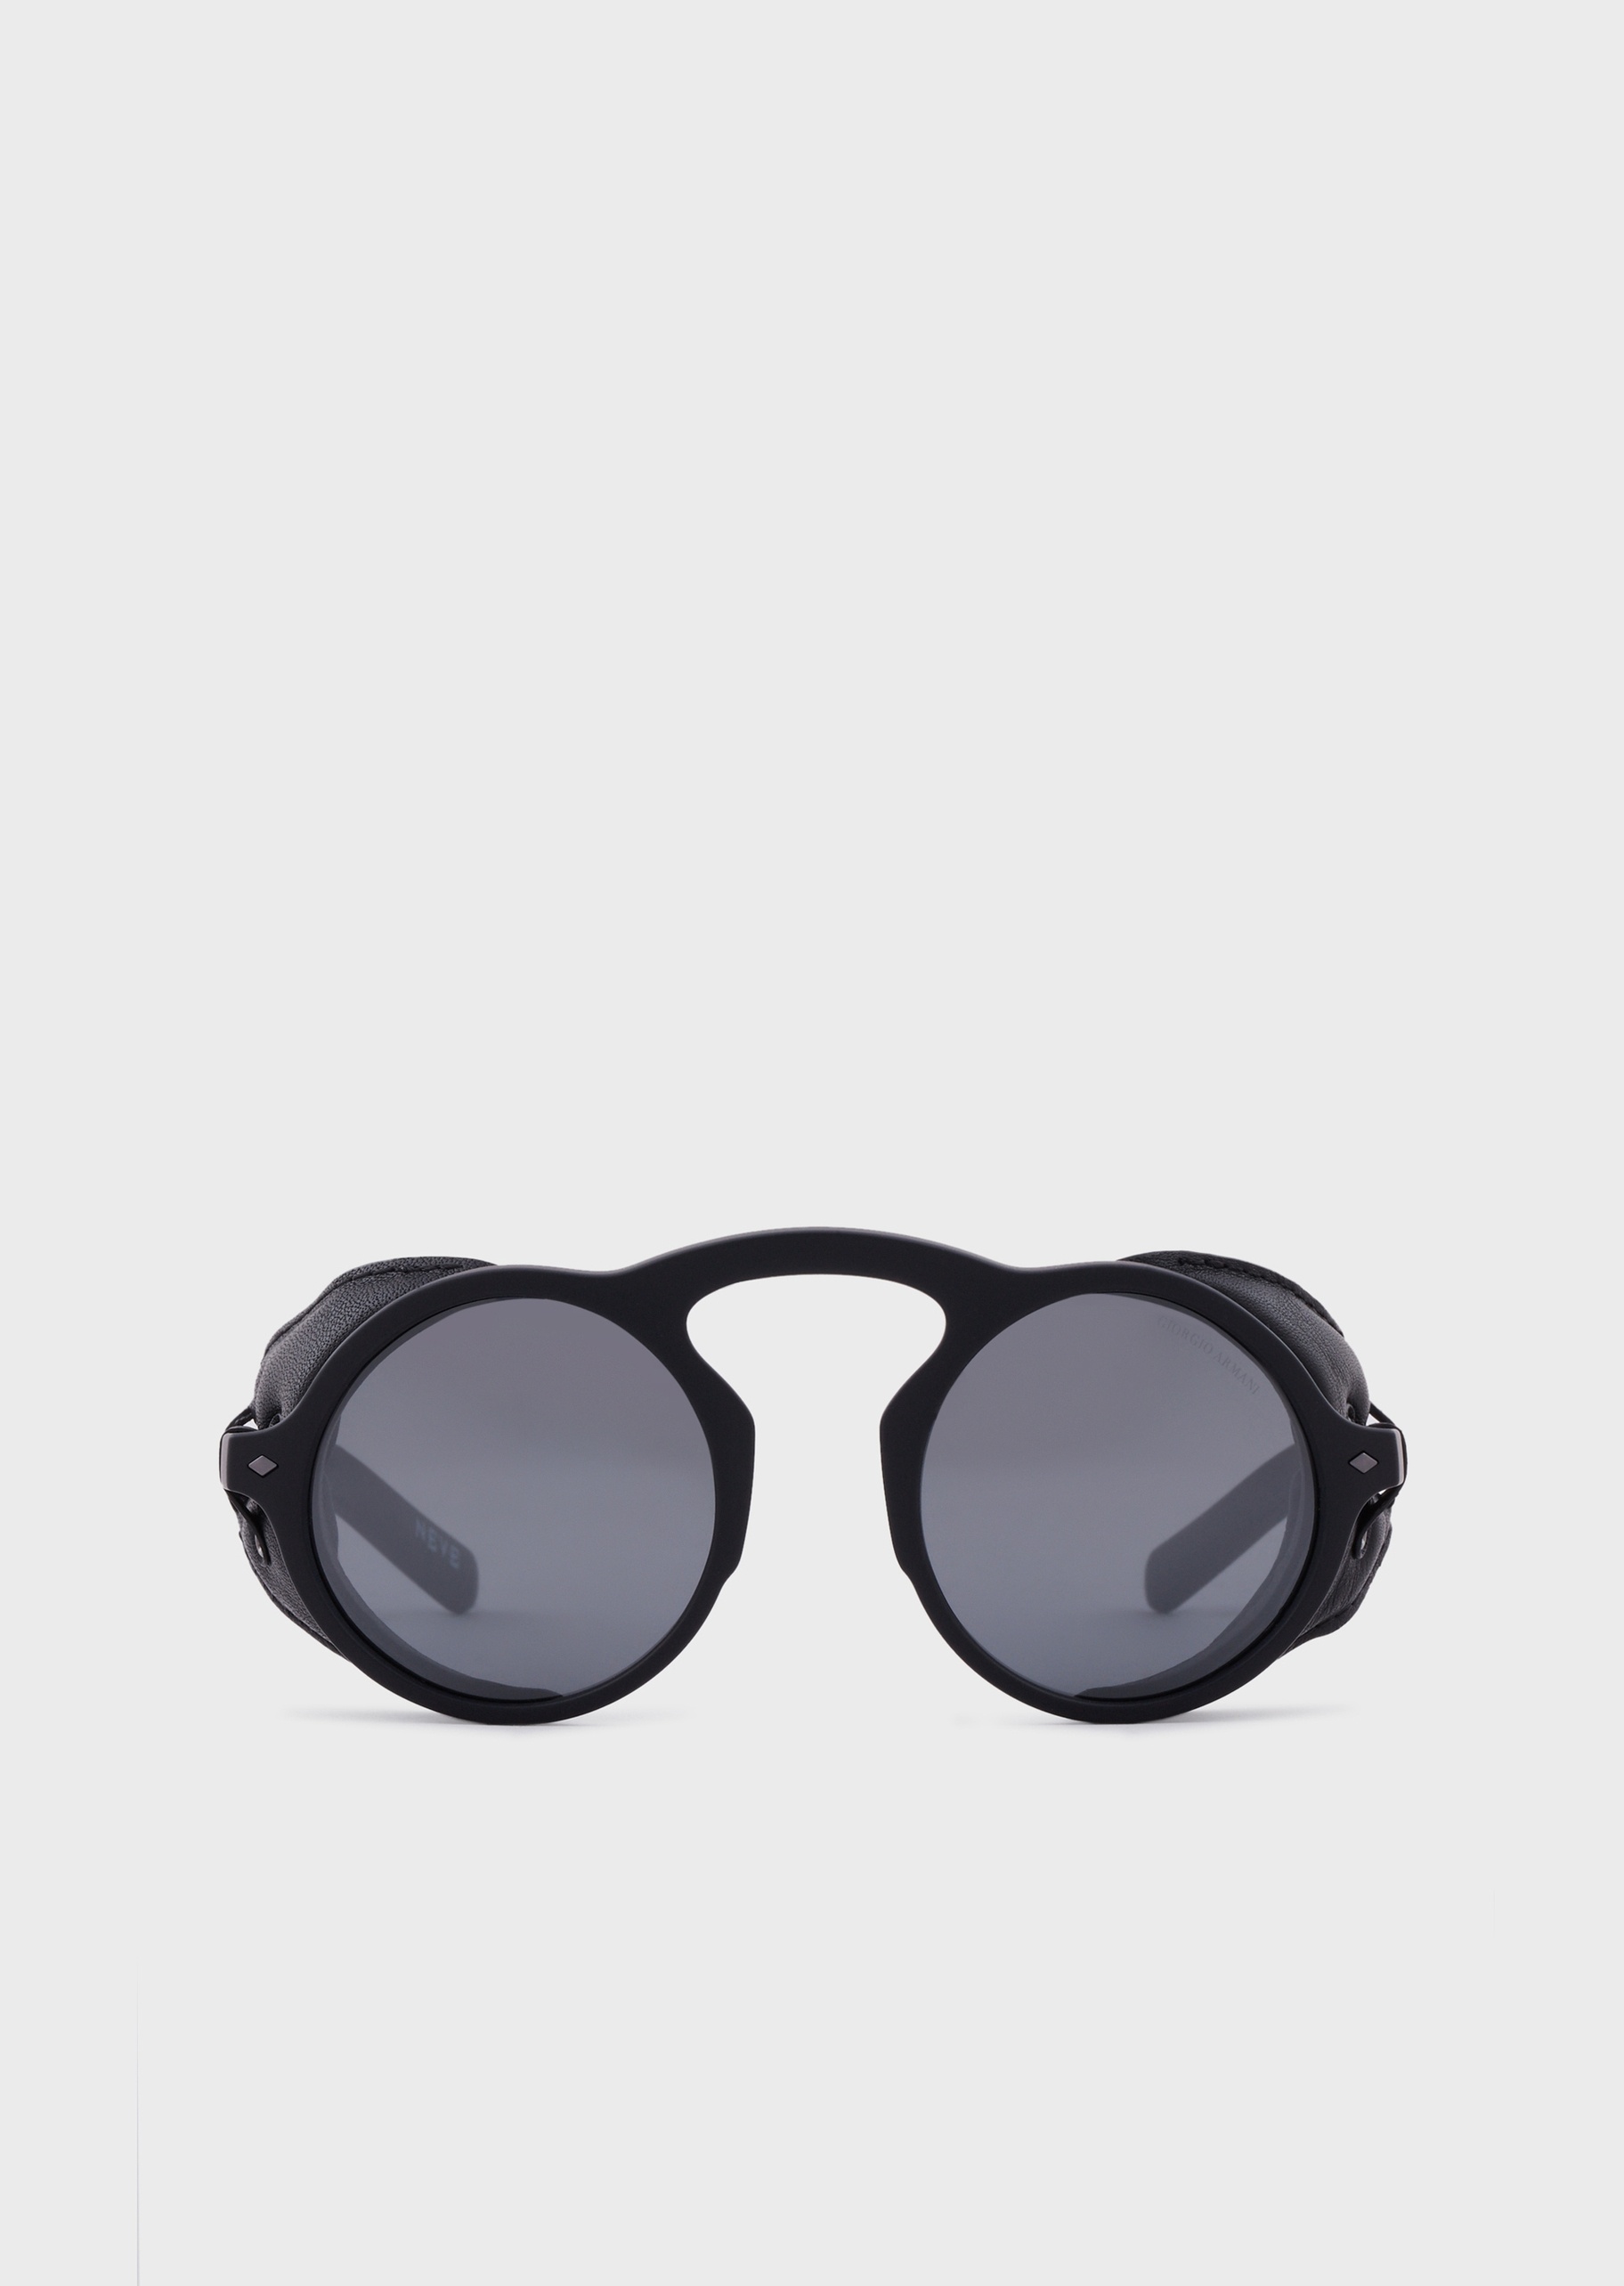 Giorgio Armani 简约时尚太阳镜